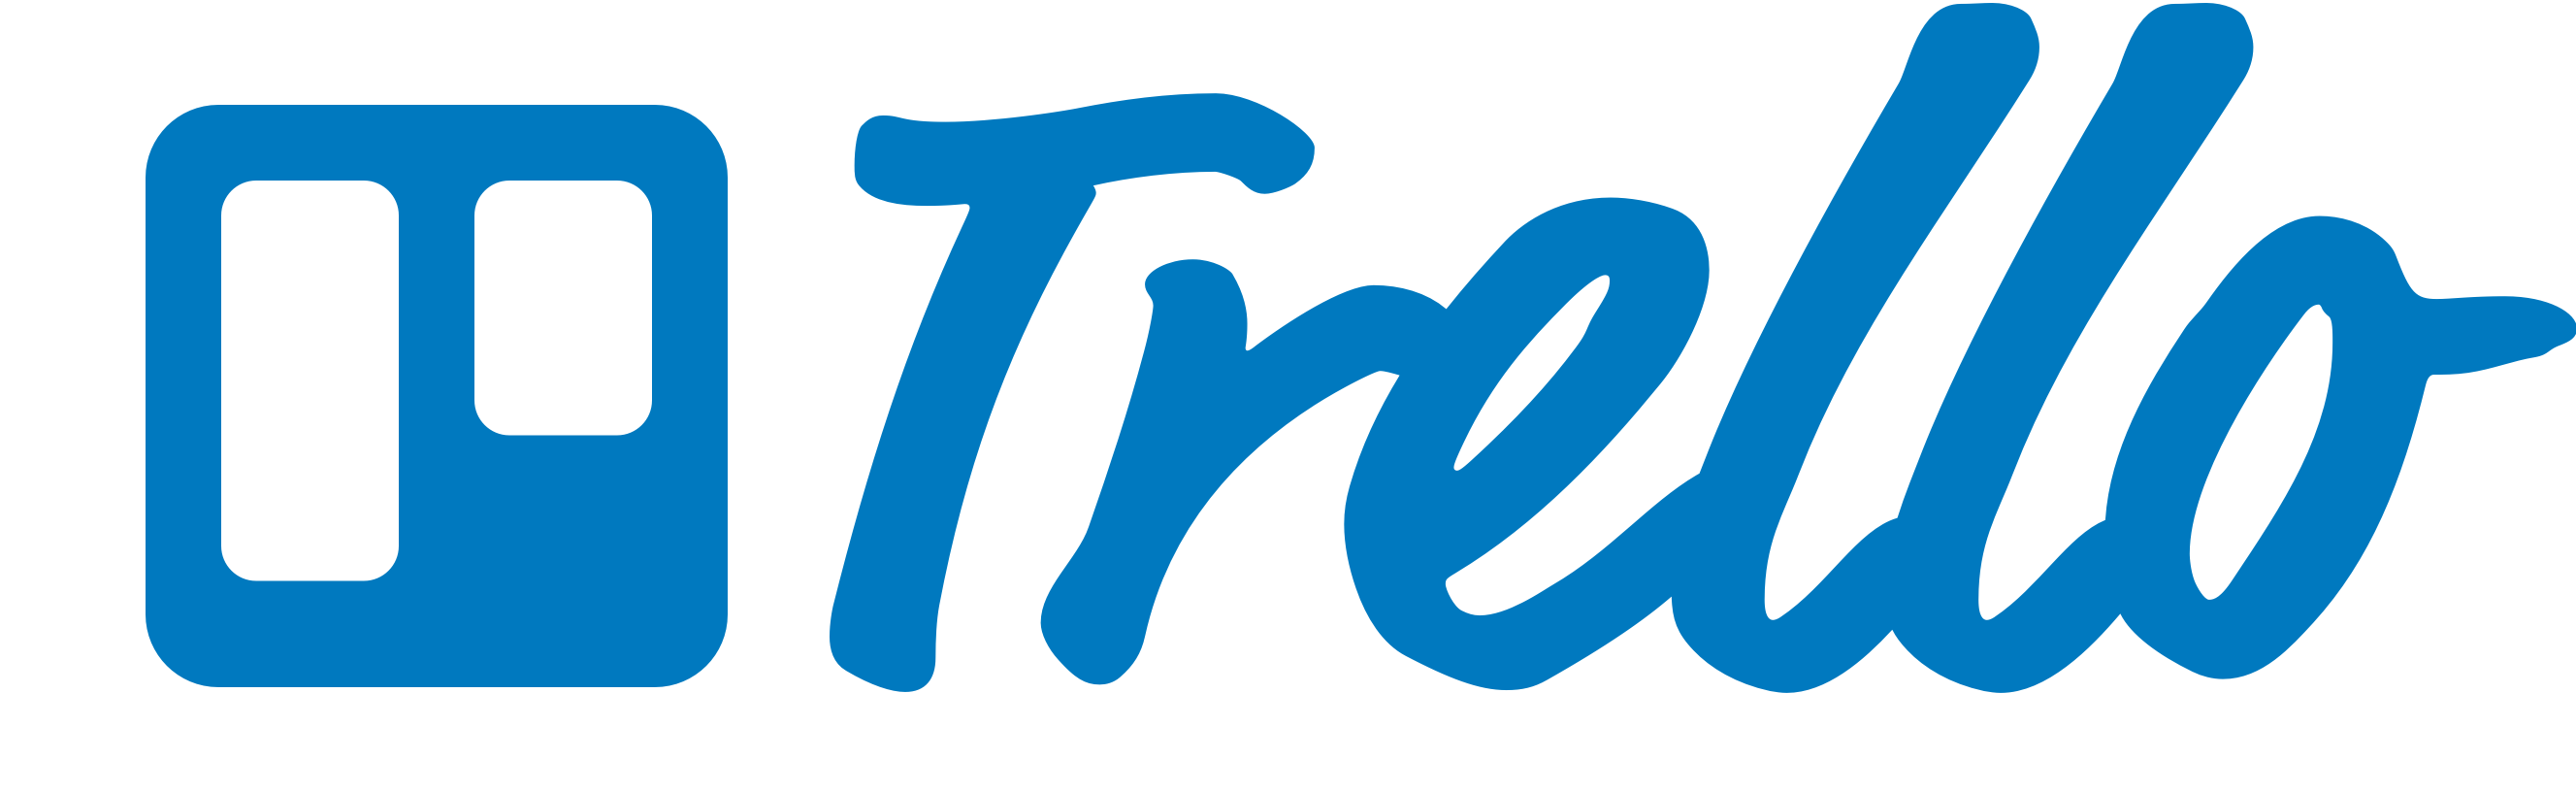 Download The Trello Logo (Zip) - Trello, Transparent background PNG HD thumbnail